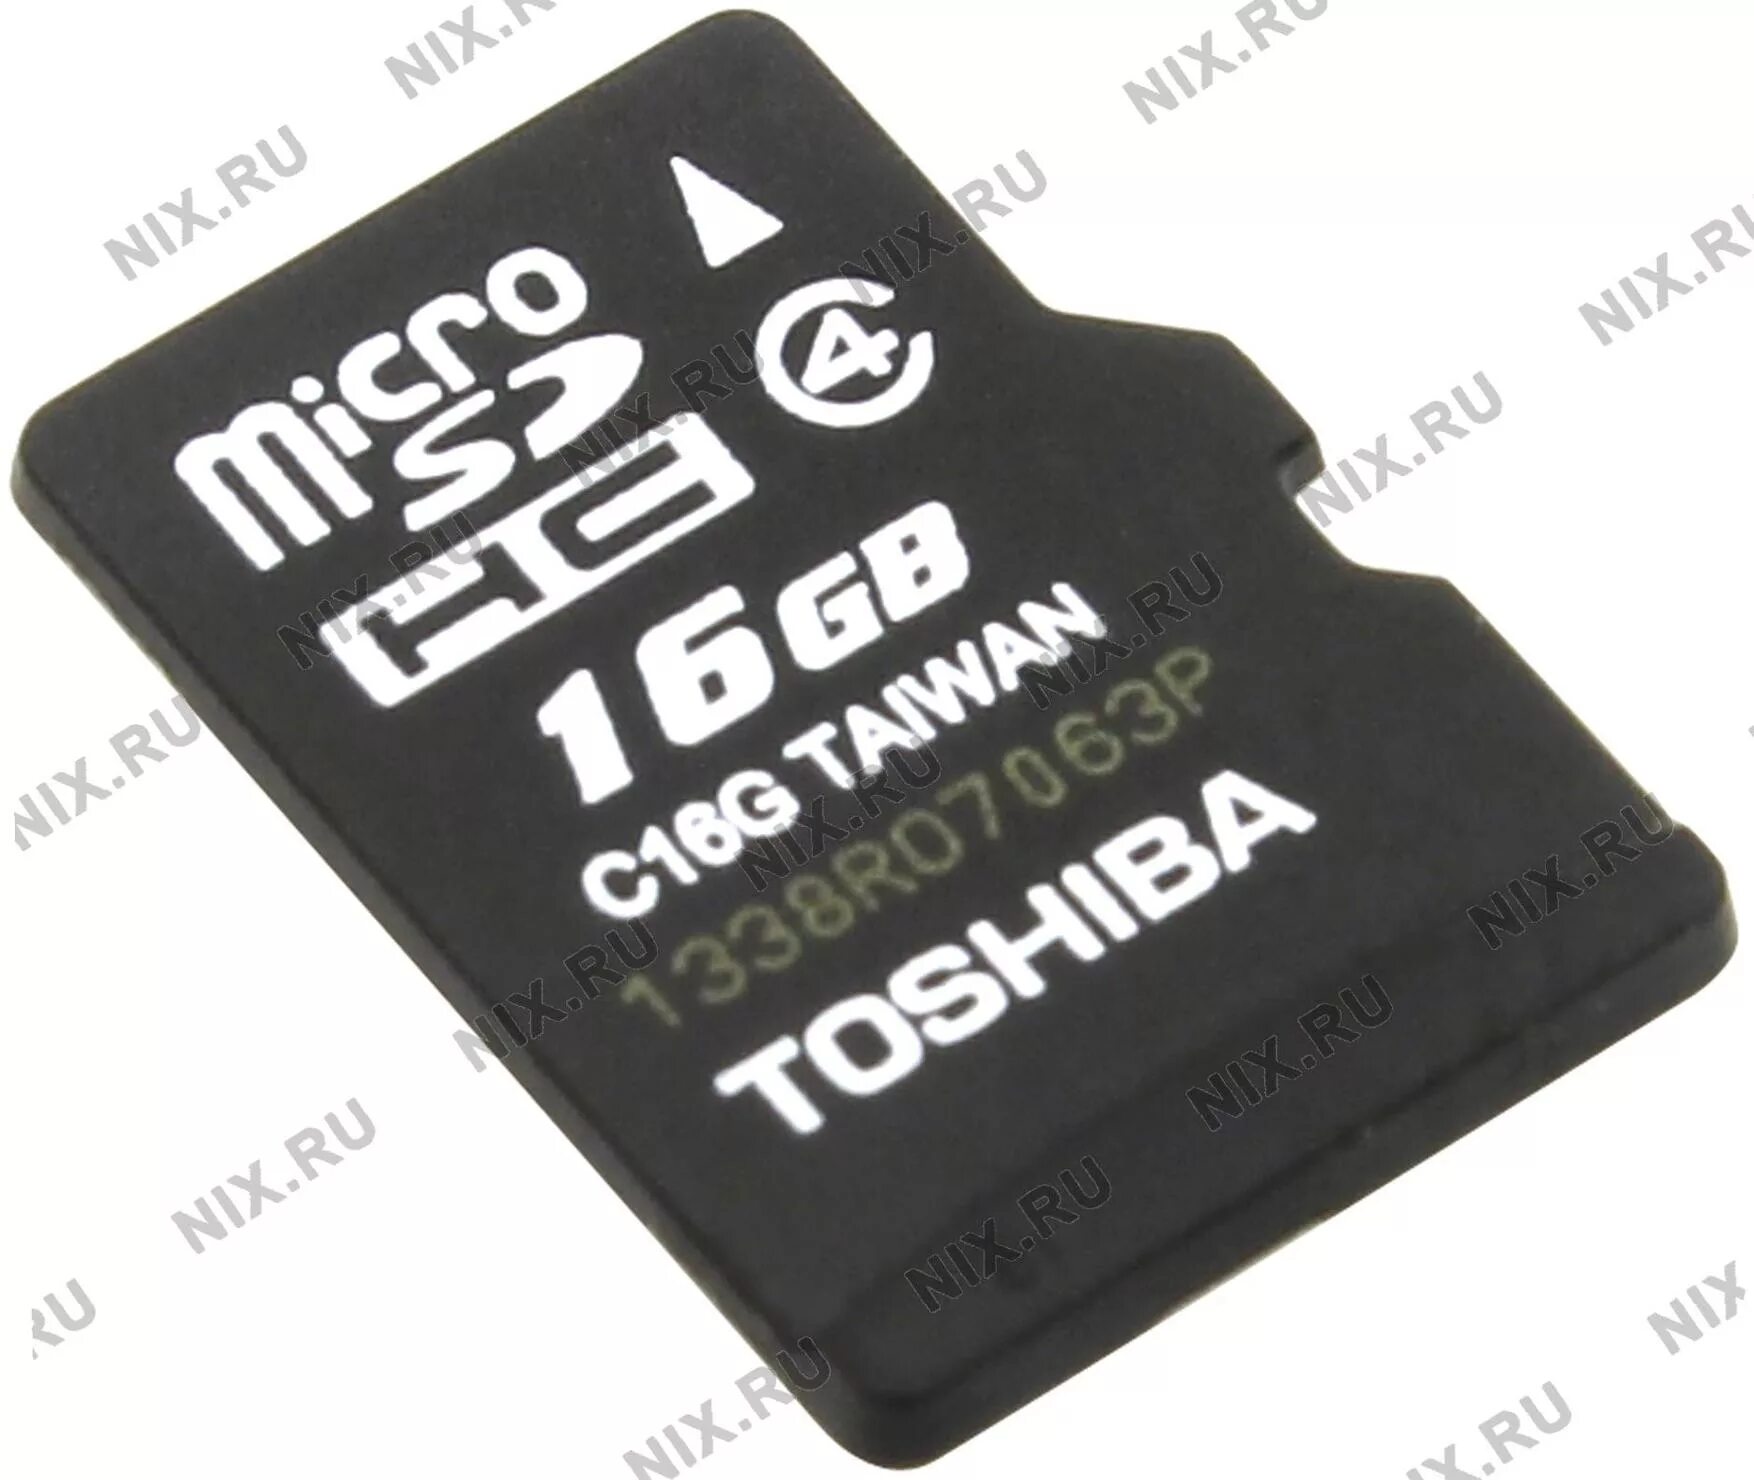 Toshiba SD Card. Карта памяти Toshiba SD-c04gr7w4. SD карта 16. Micro SDHC карта 16 ГБ Datamax.